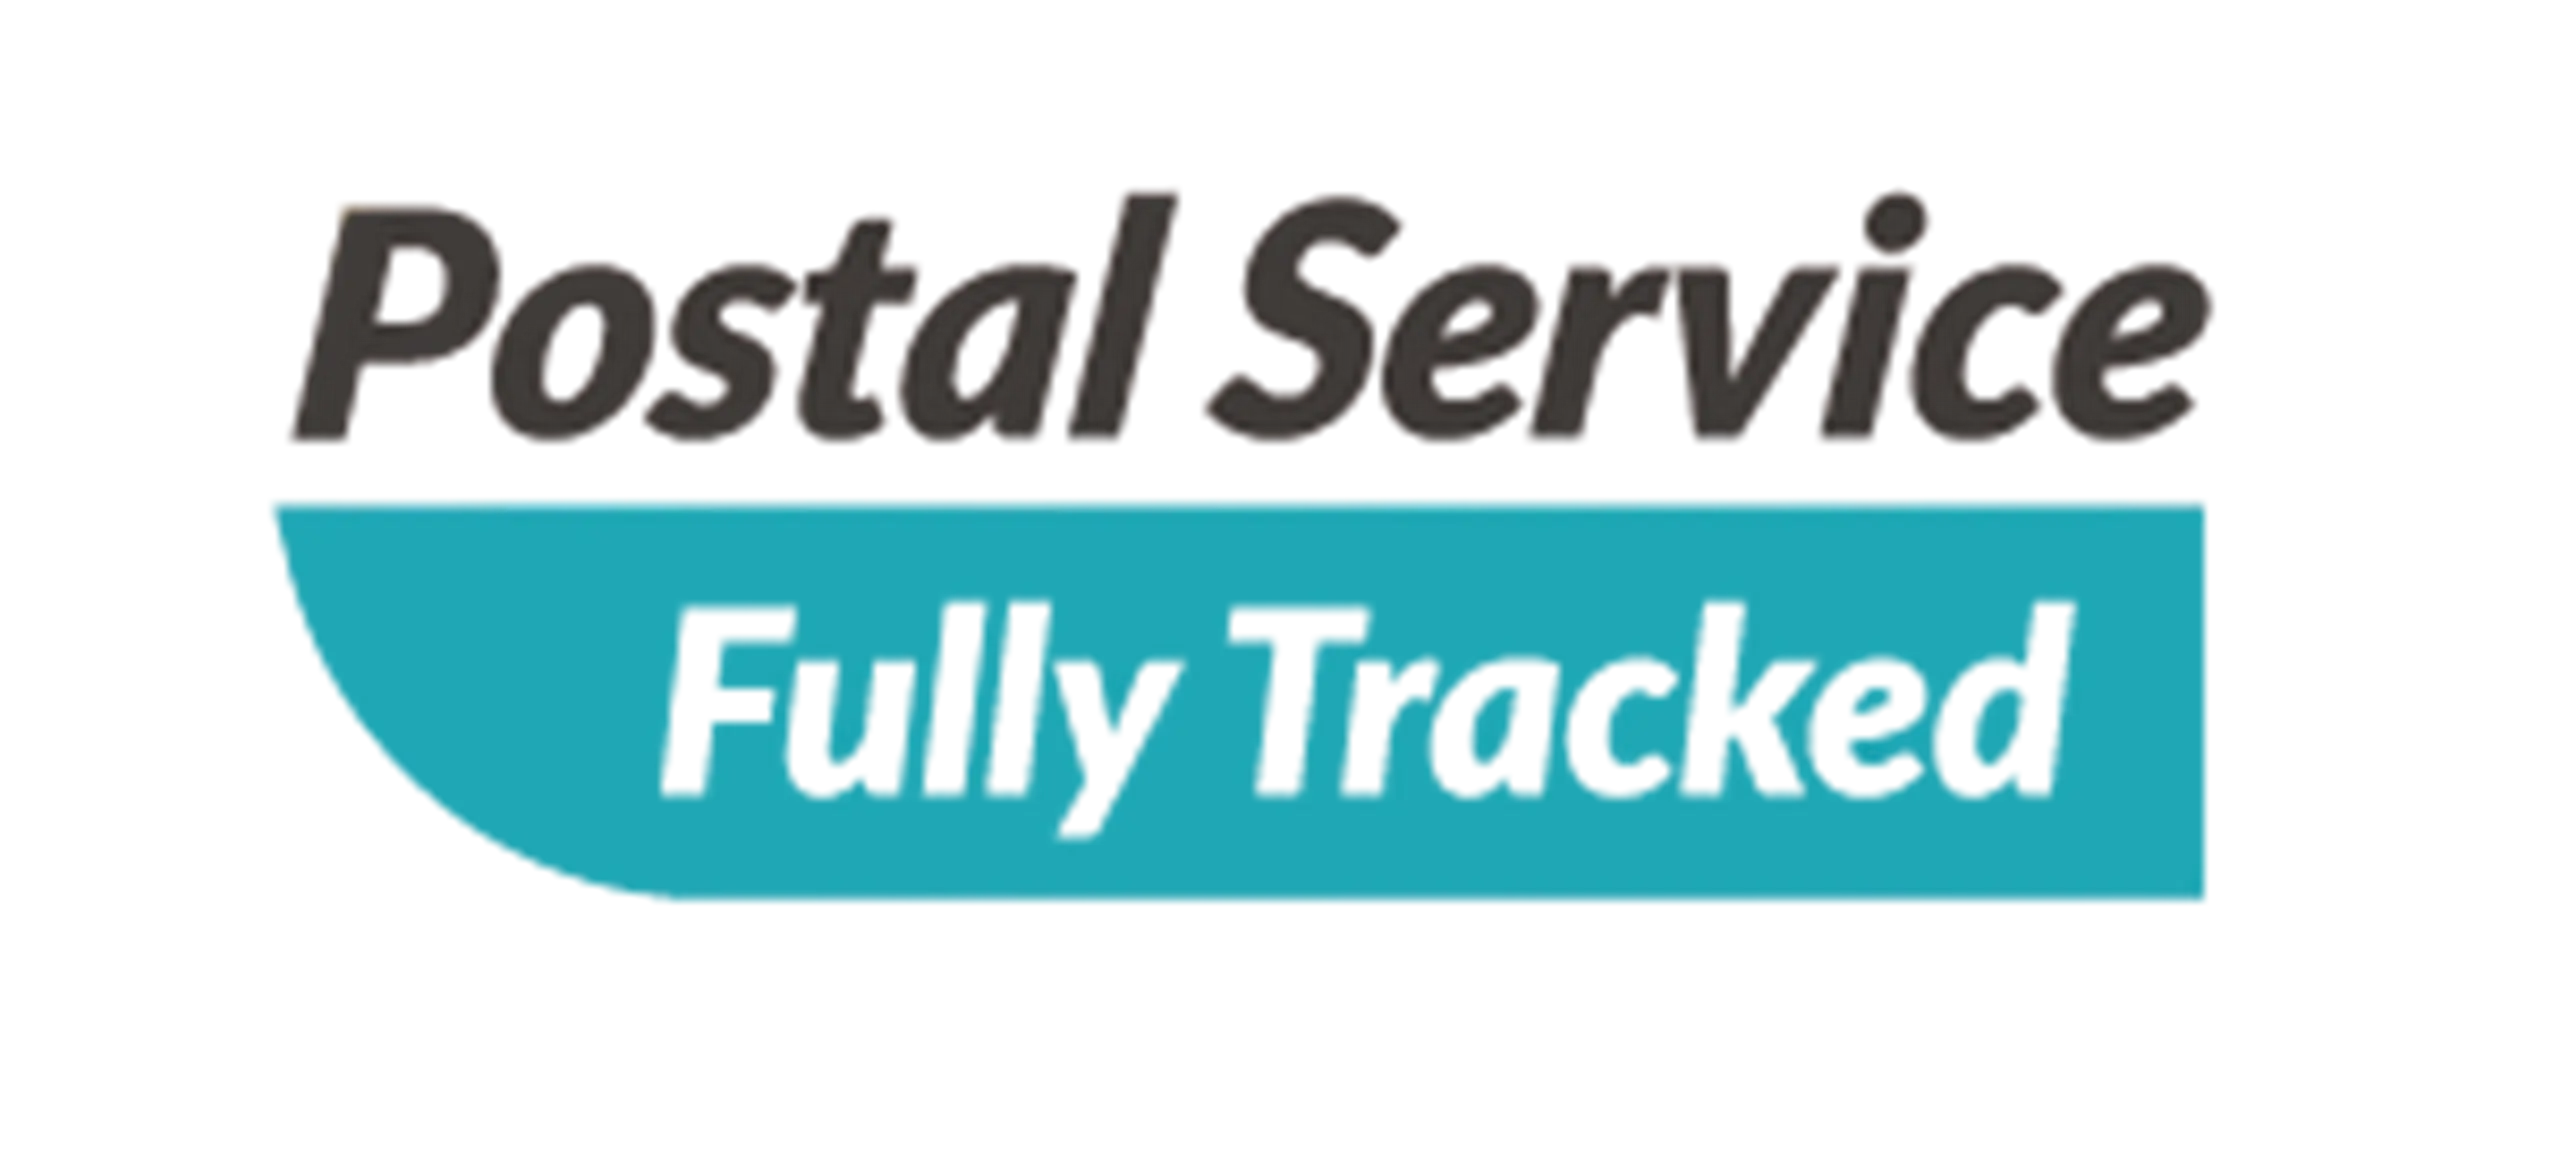 postal service fullytracked removebg preview